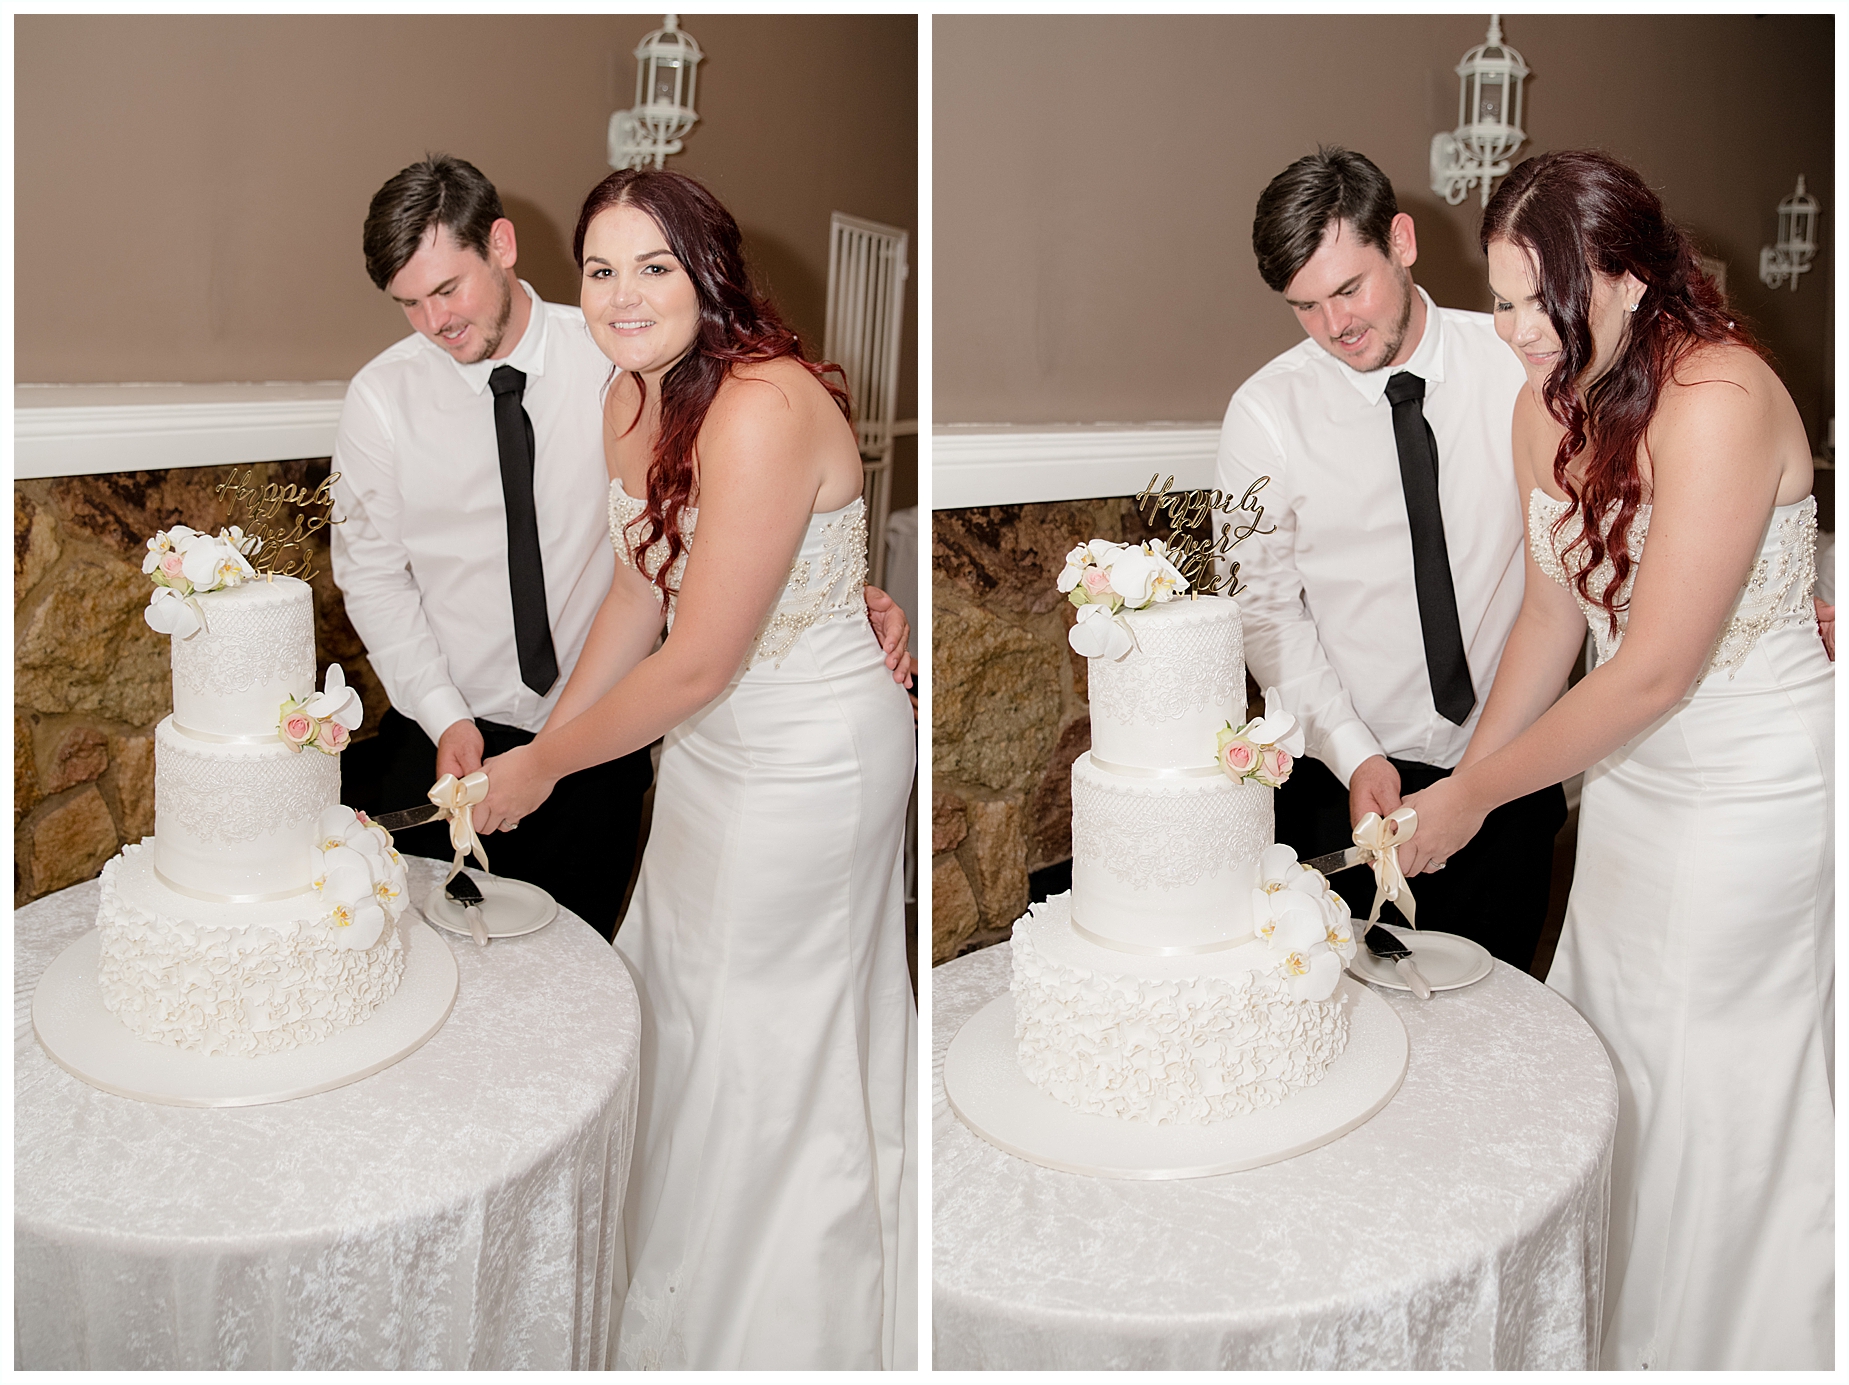 Matthew and Tegan Wedding the cake